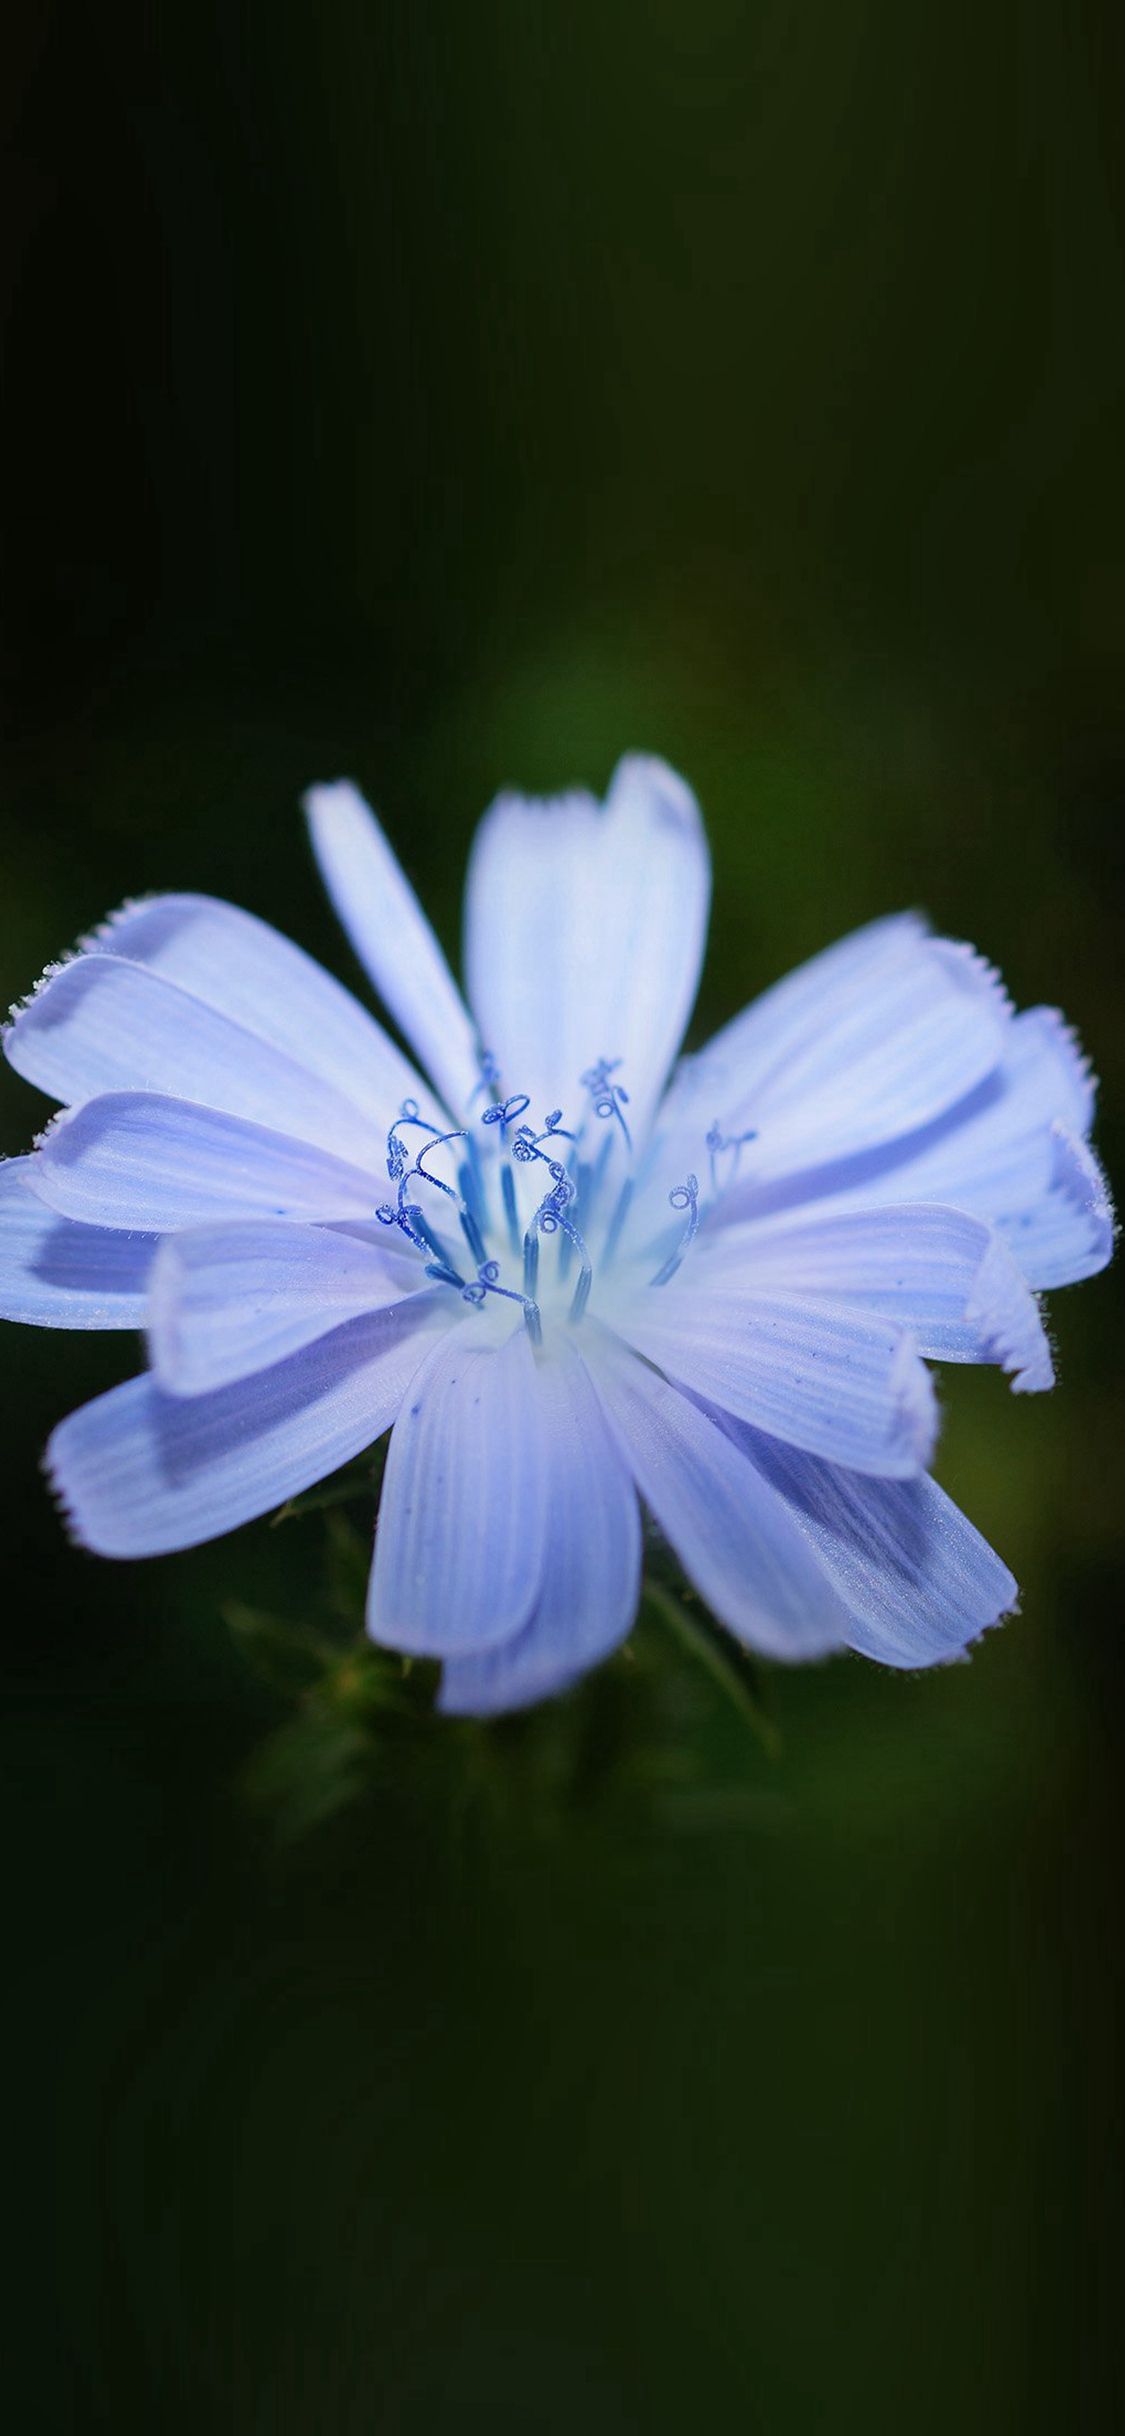 Flower Blue Spring New Llife Nature Dark iPhone X Wallpaper Free